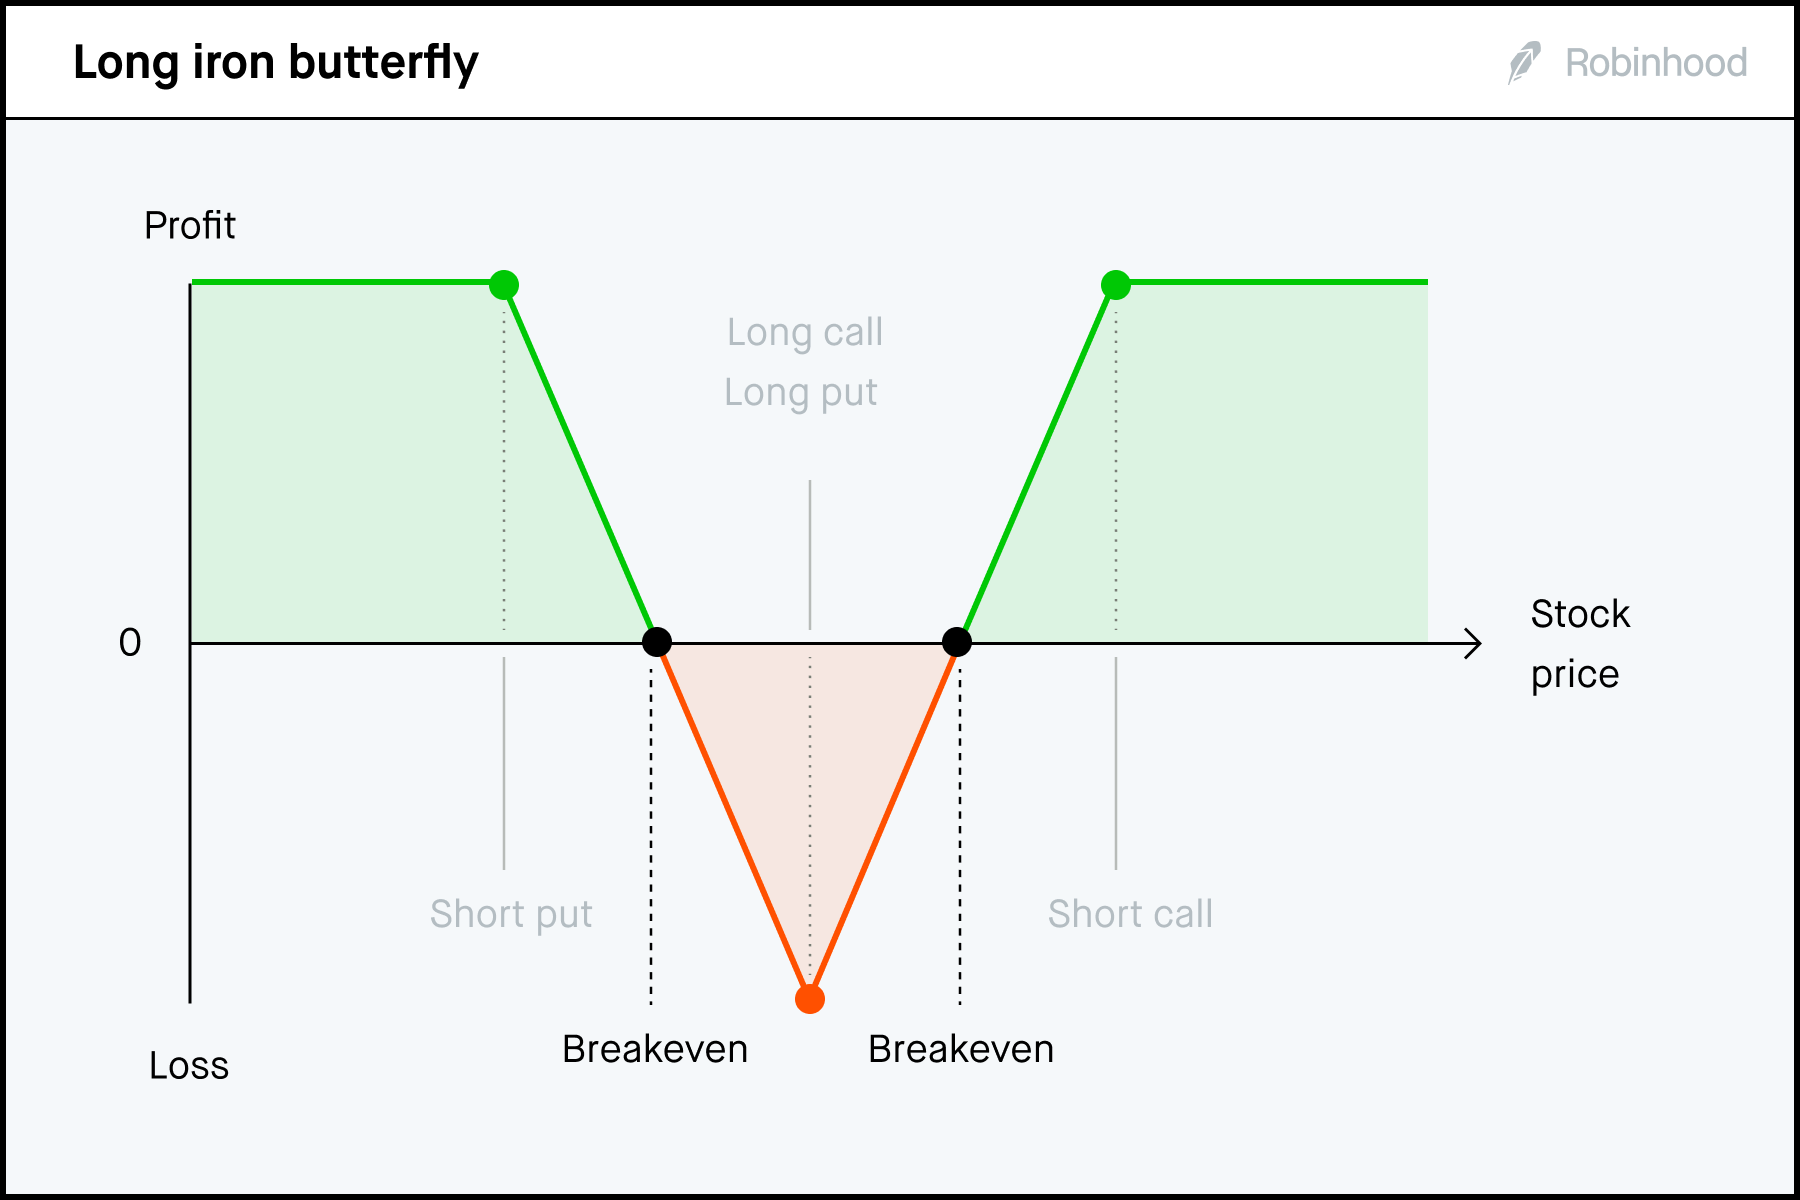 Long iron butterfly P/L chart 3x